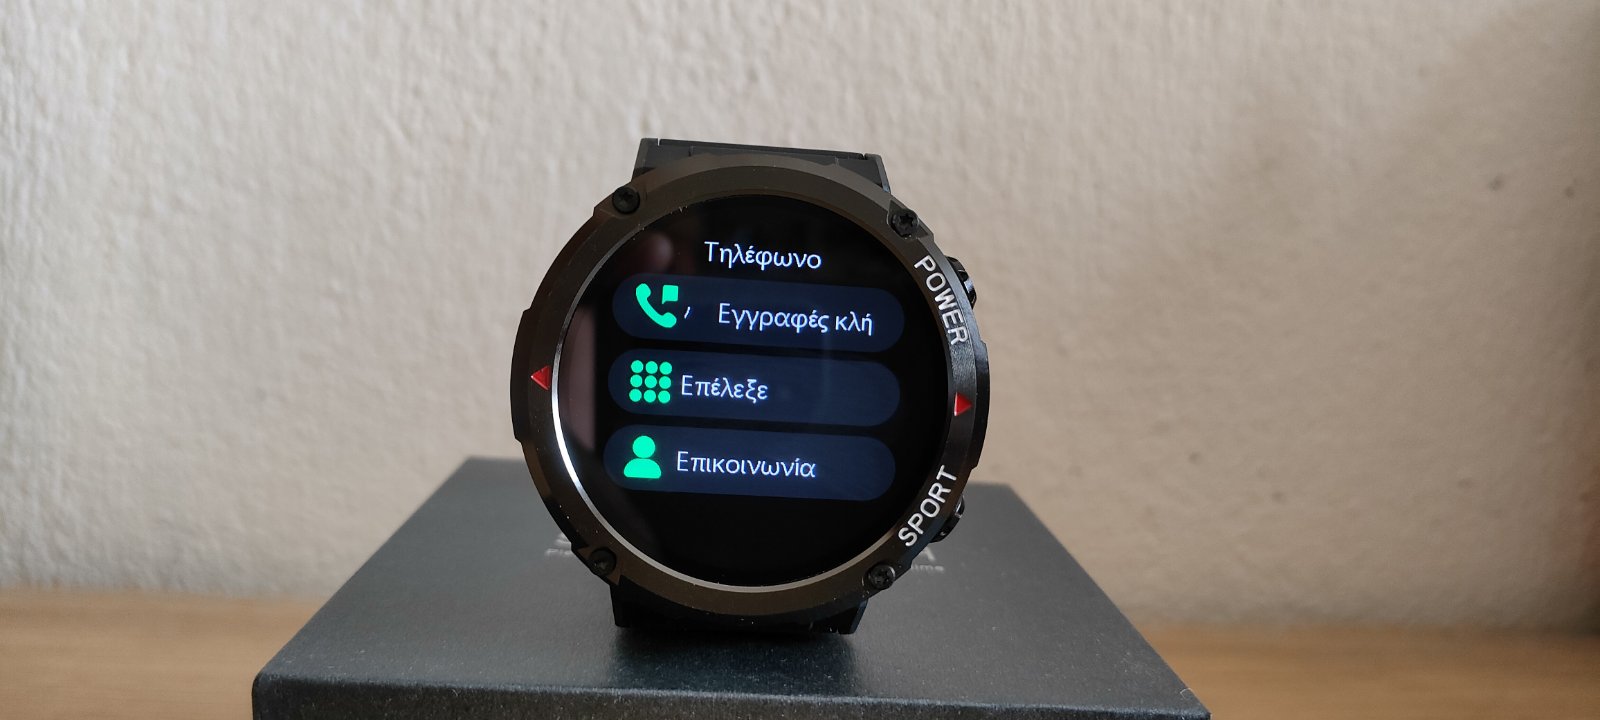 Smartwatch καινούργιο με οθόνη 1,6 ίντσες, ΒΤ Call, Ελληνικό μενού(βίντεο στην περιγραφή)